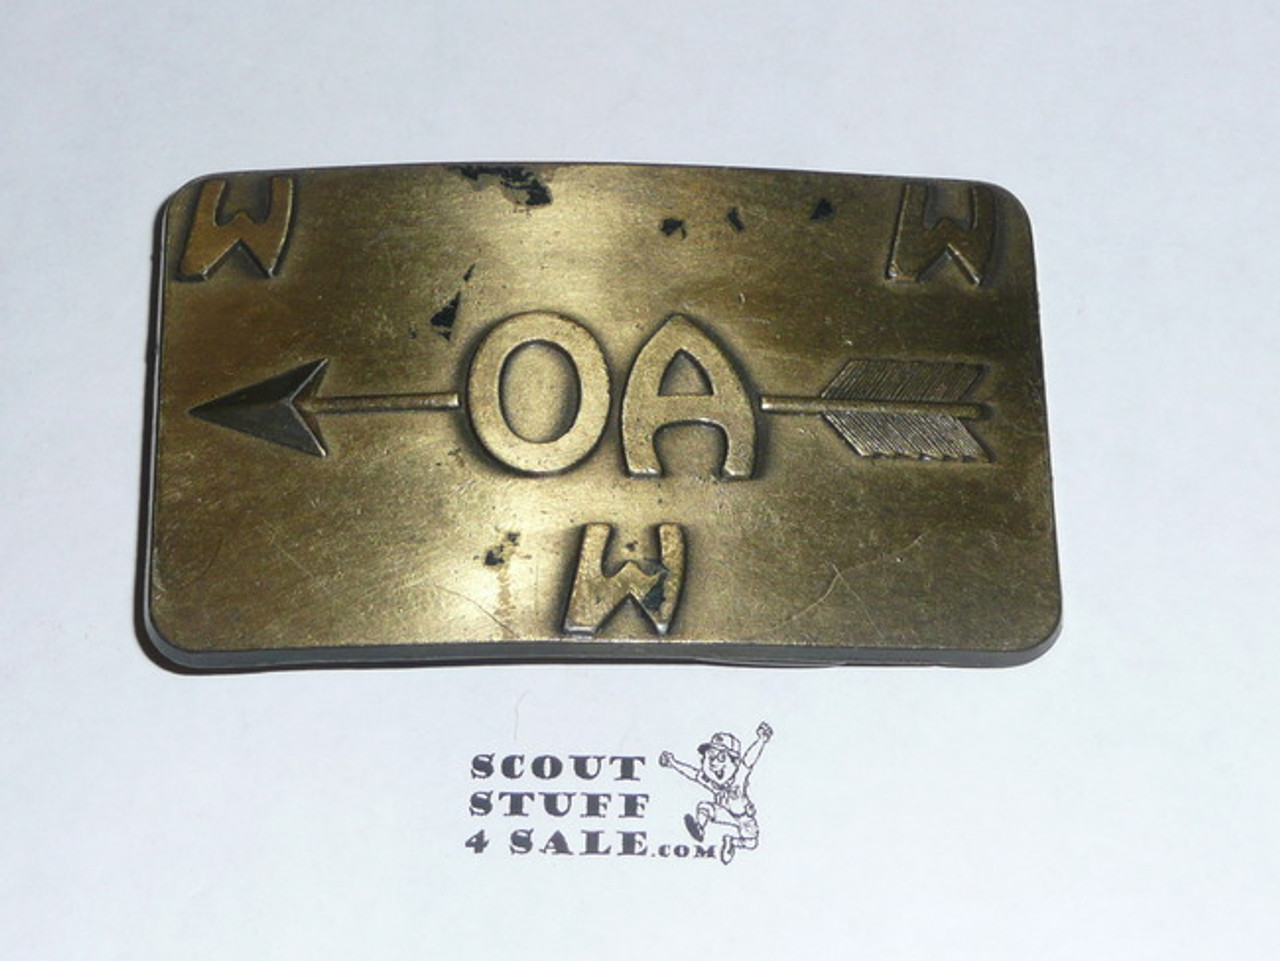 Order of the Arrow Bronze Belt Buckle, shows wear